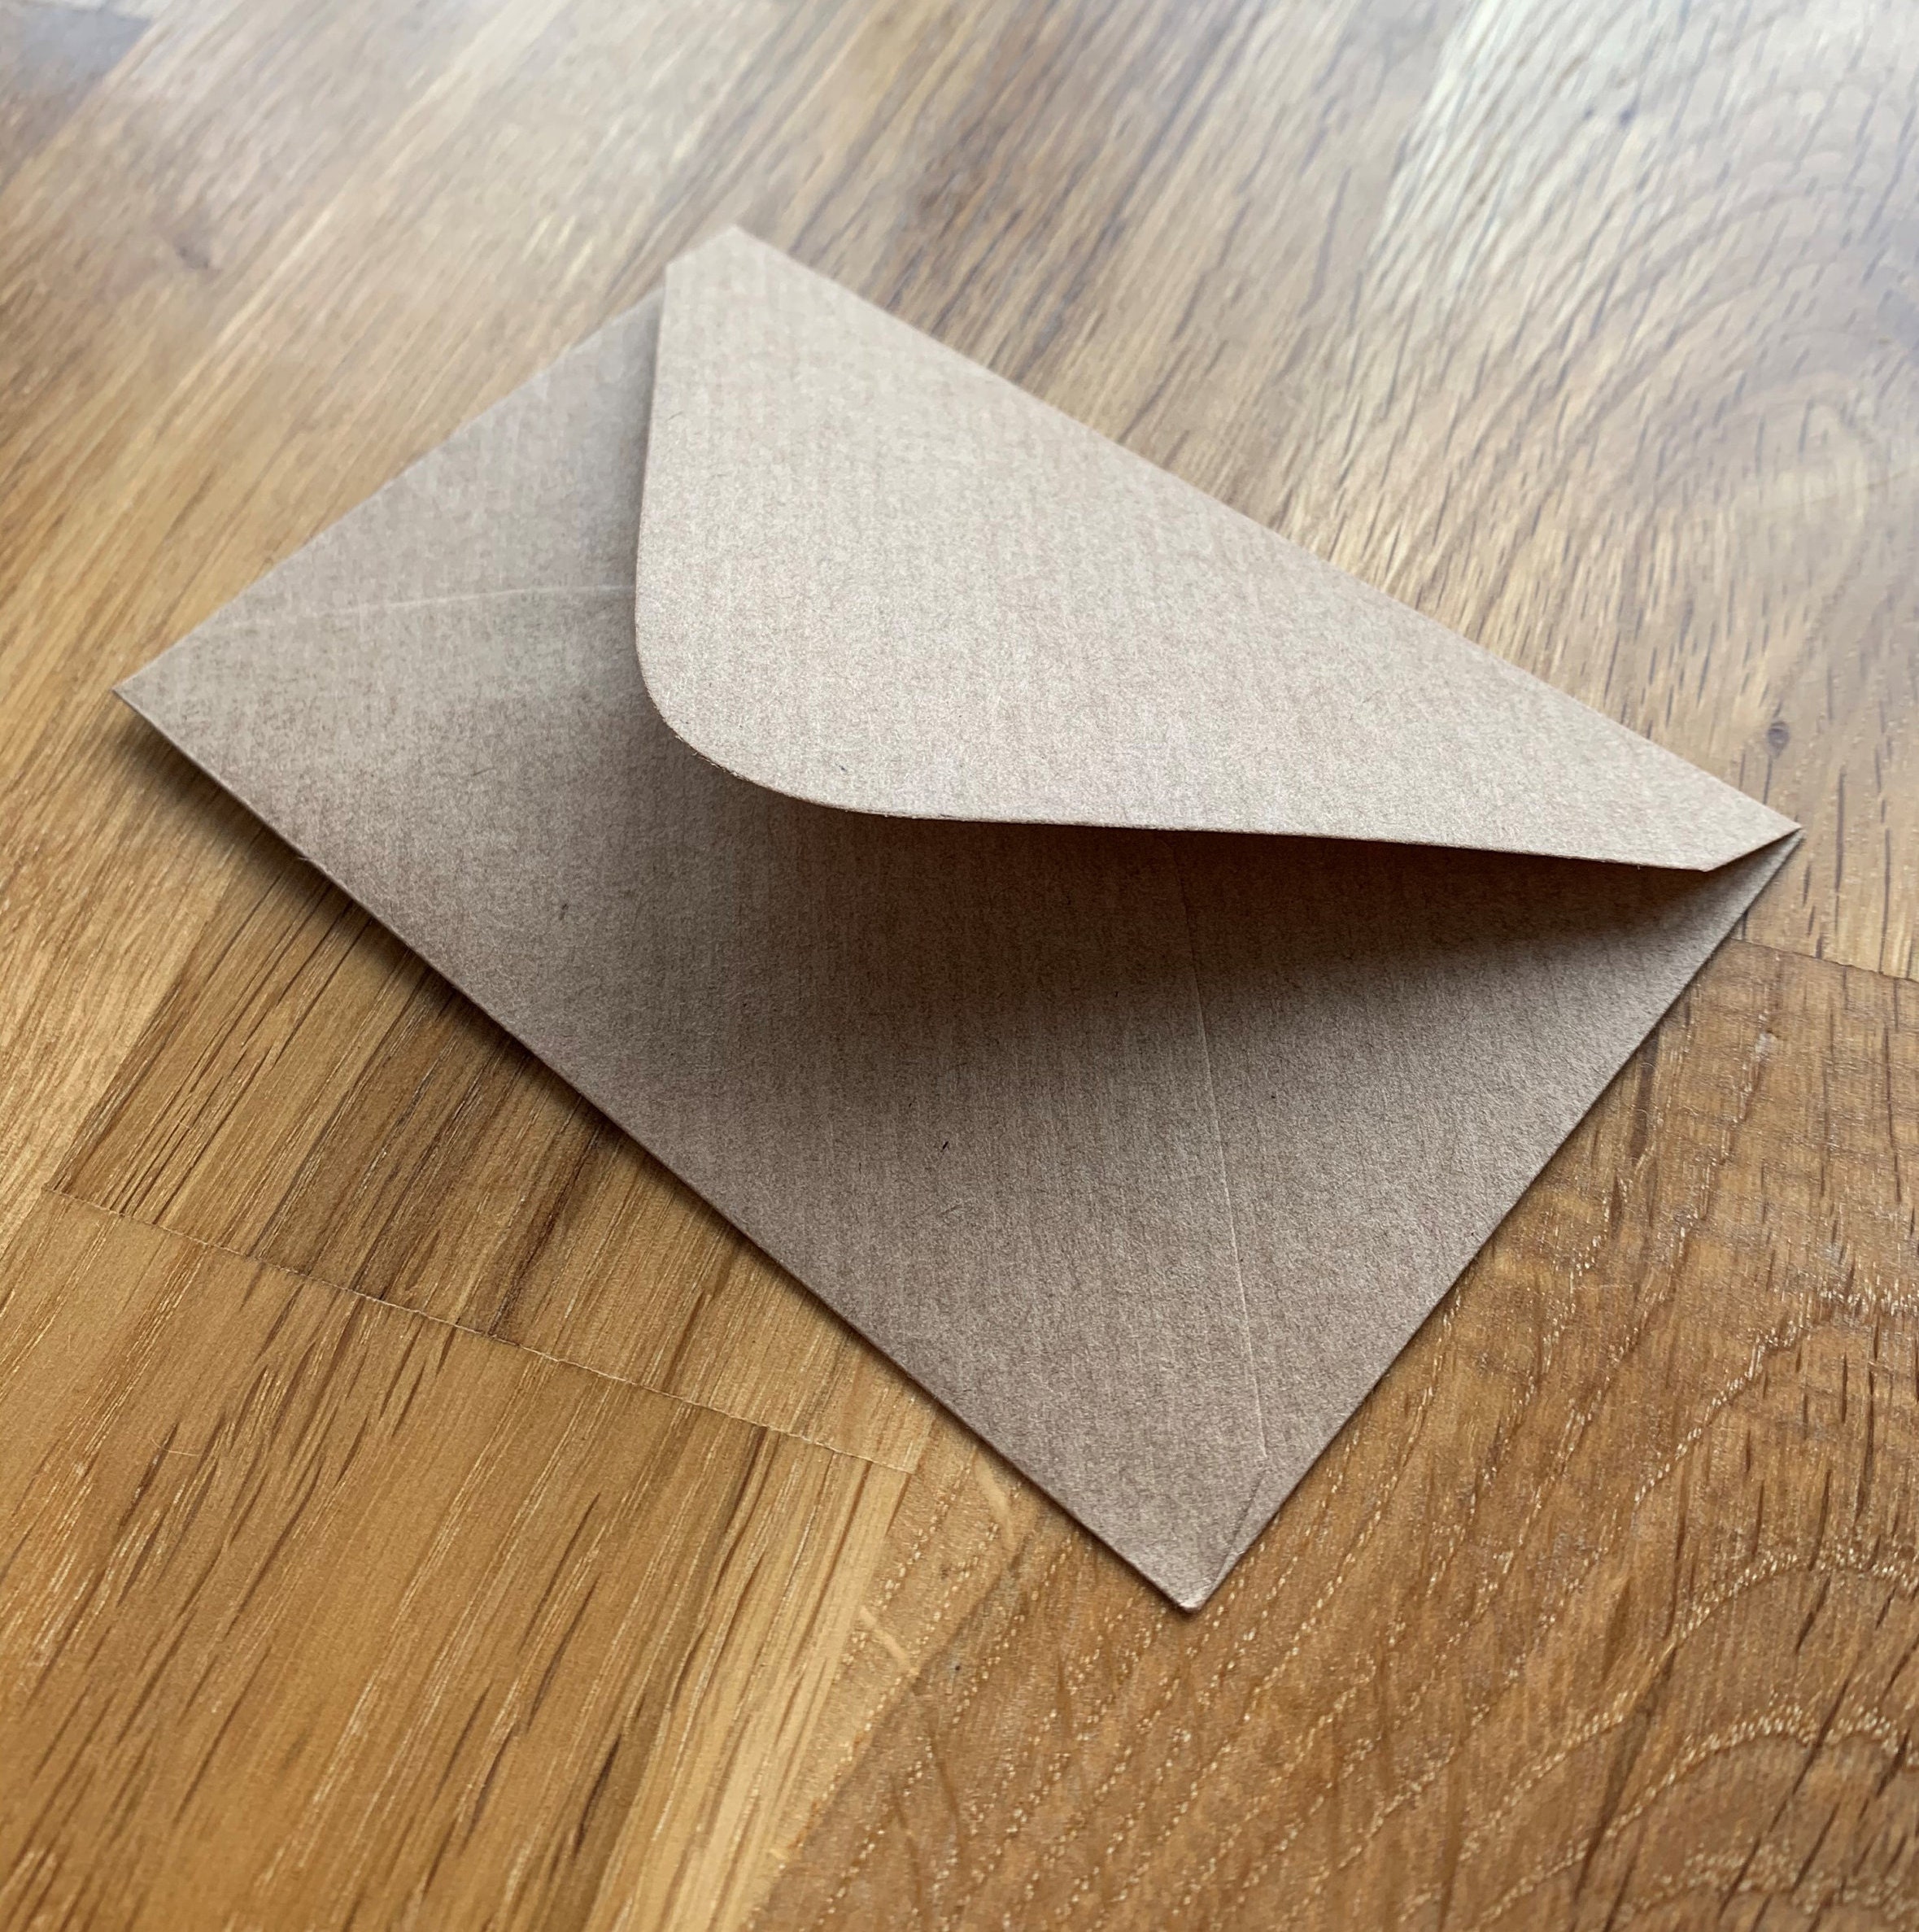 5 x 7 Recycled Kraft Envelopes